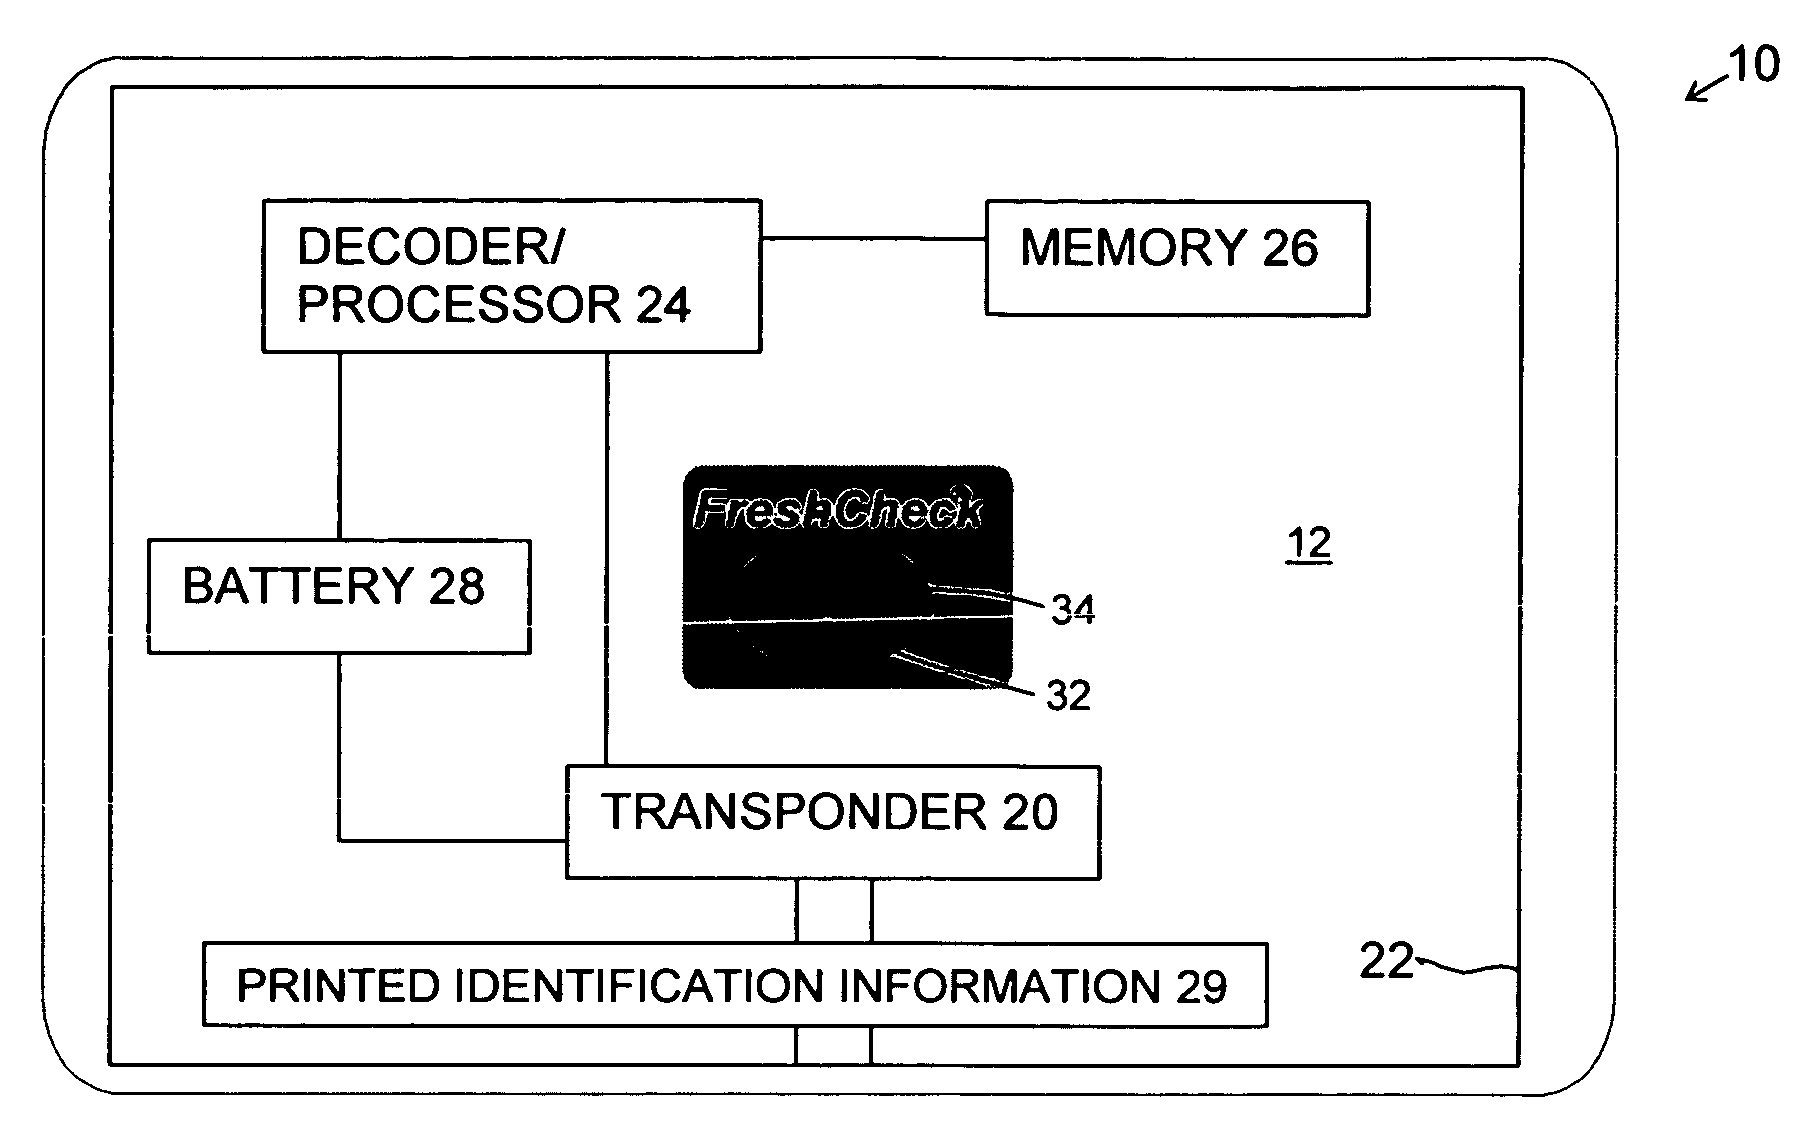 RFID tag with visual environmental condition monitor